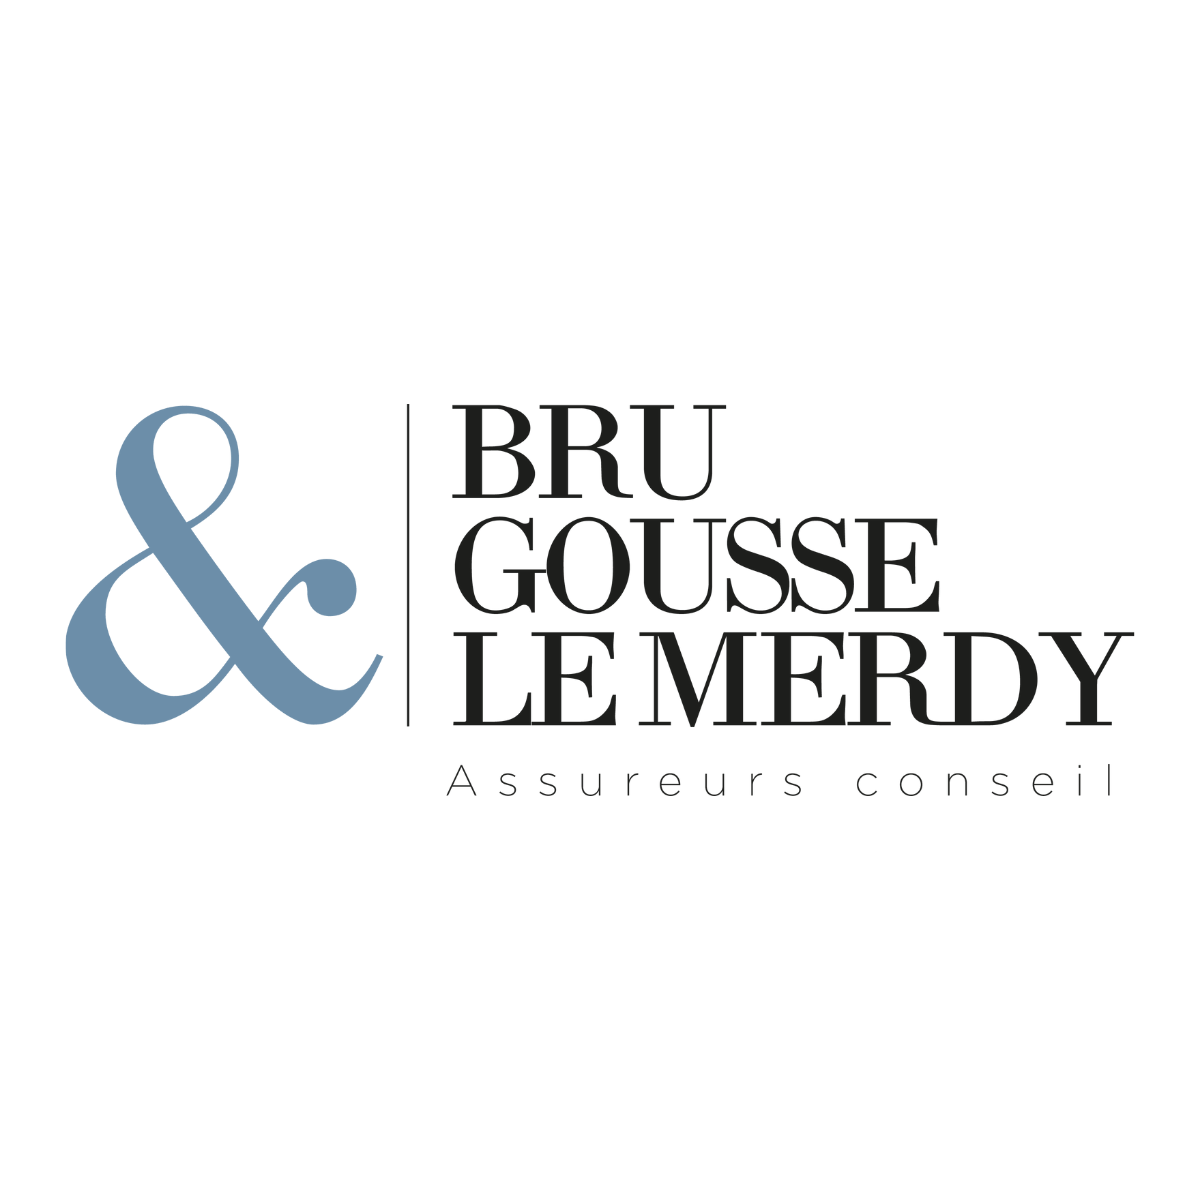 Bru Gousse Le Merdy Assureurs Conseils - Whatsgoingon